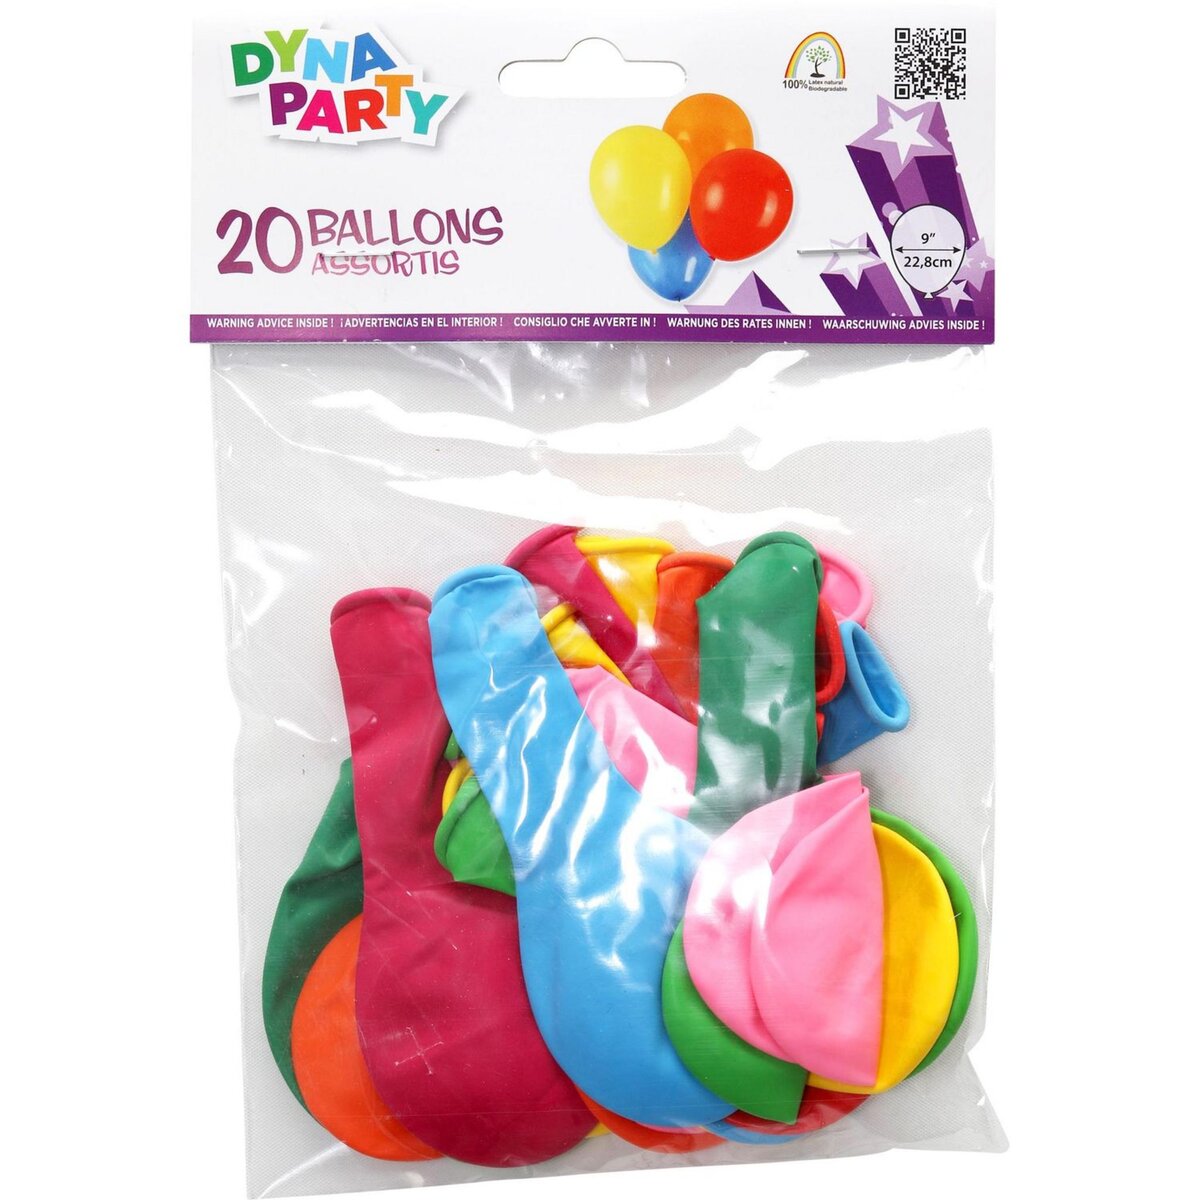 DYNASTRIB Ballons gonflables coloris assortis x20 20 pièces